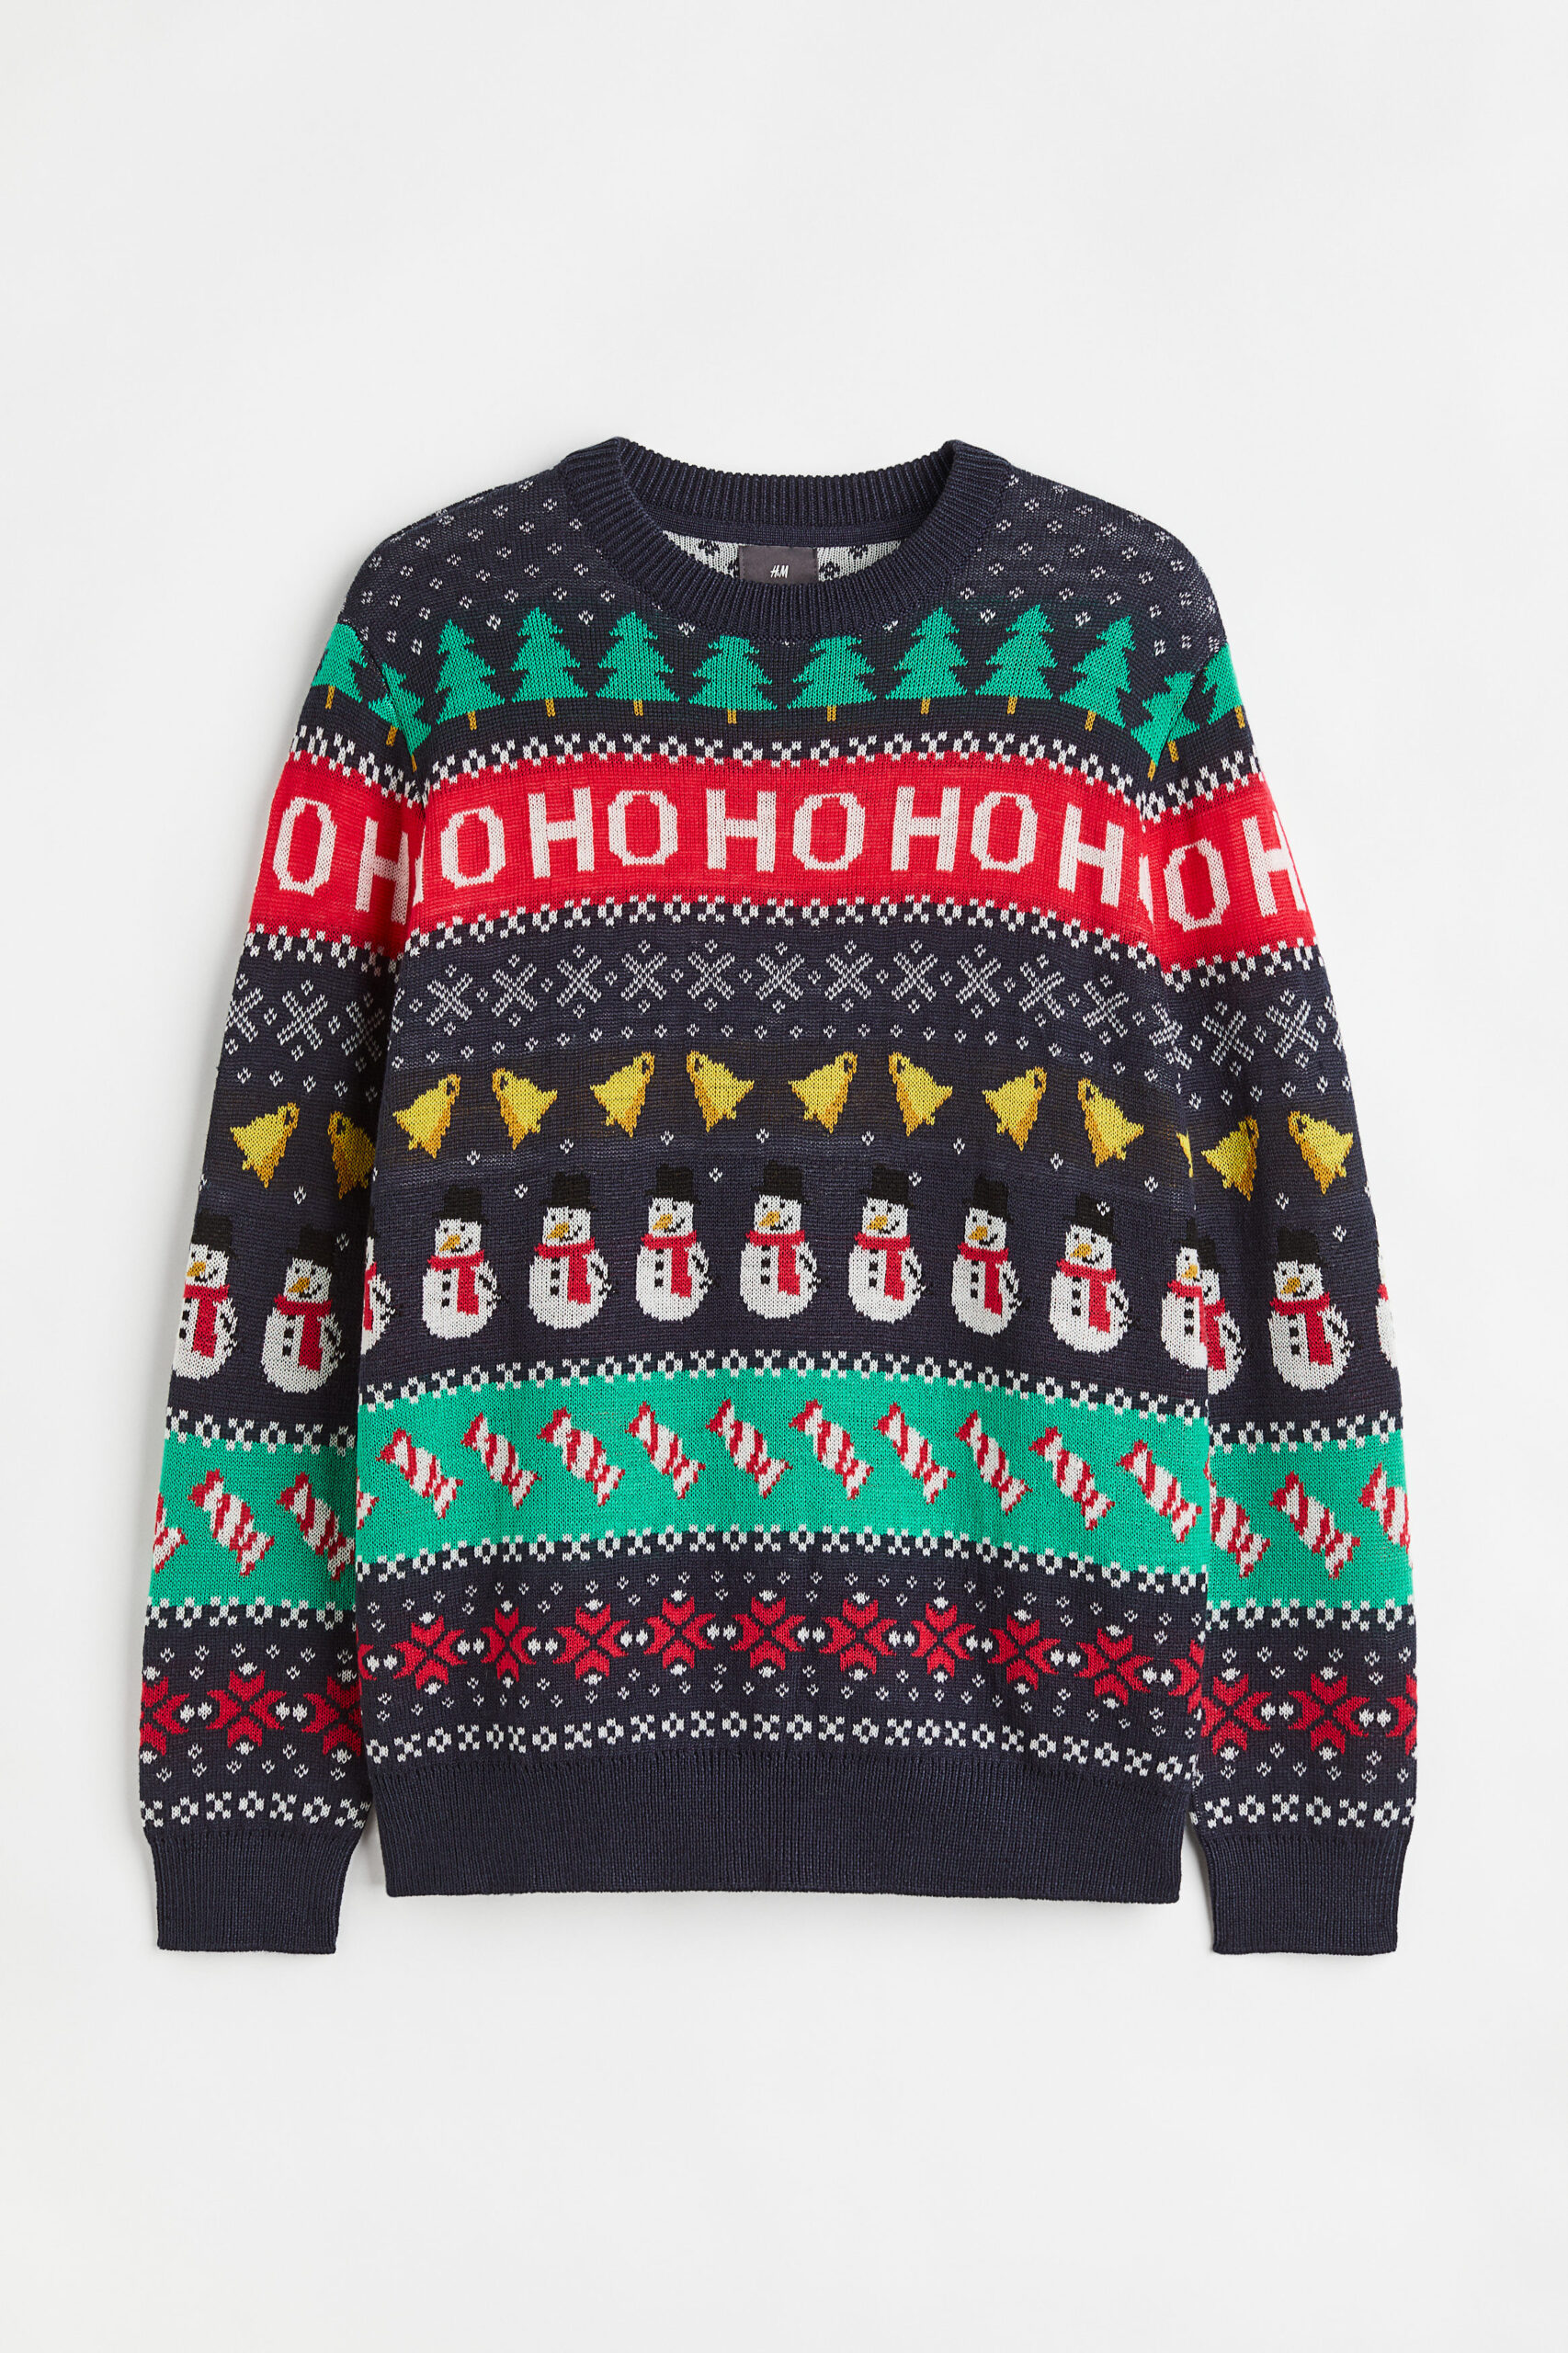 Festive holiday sweater